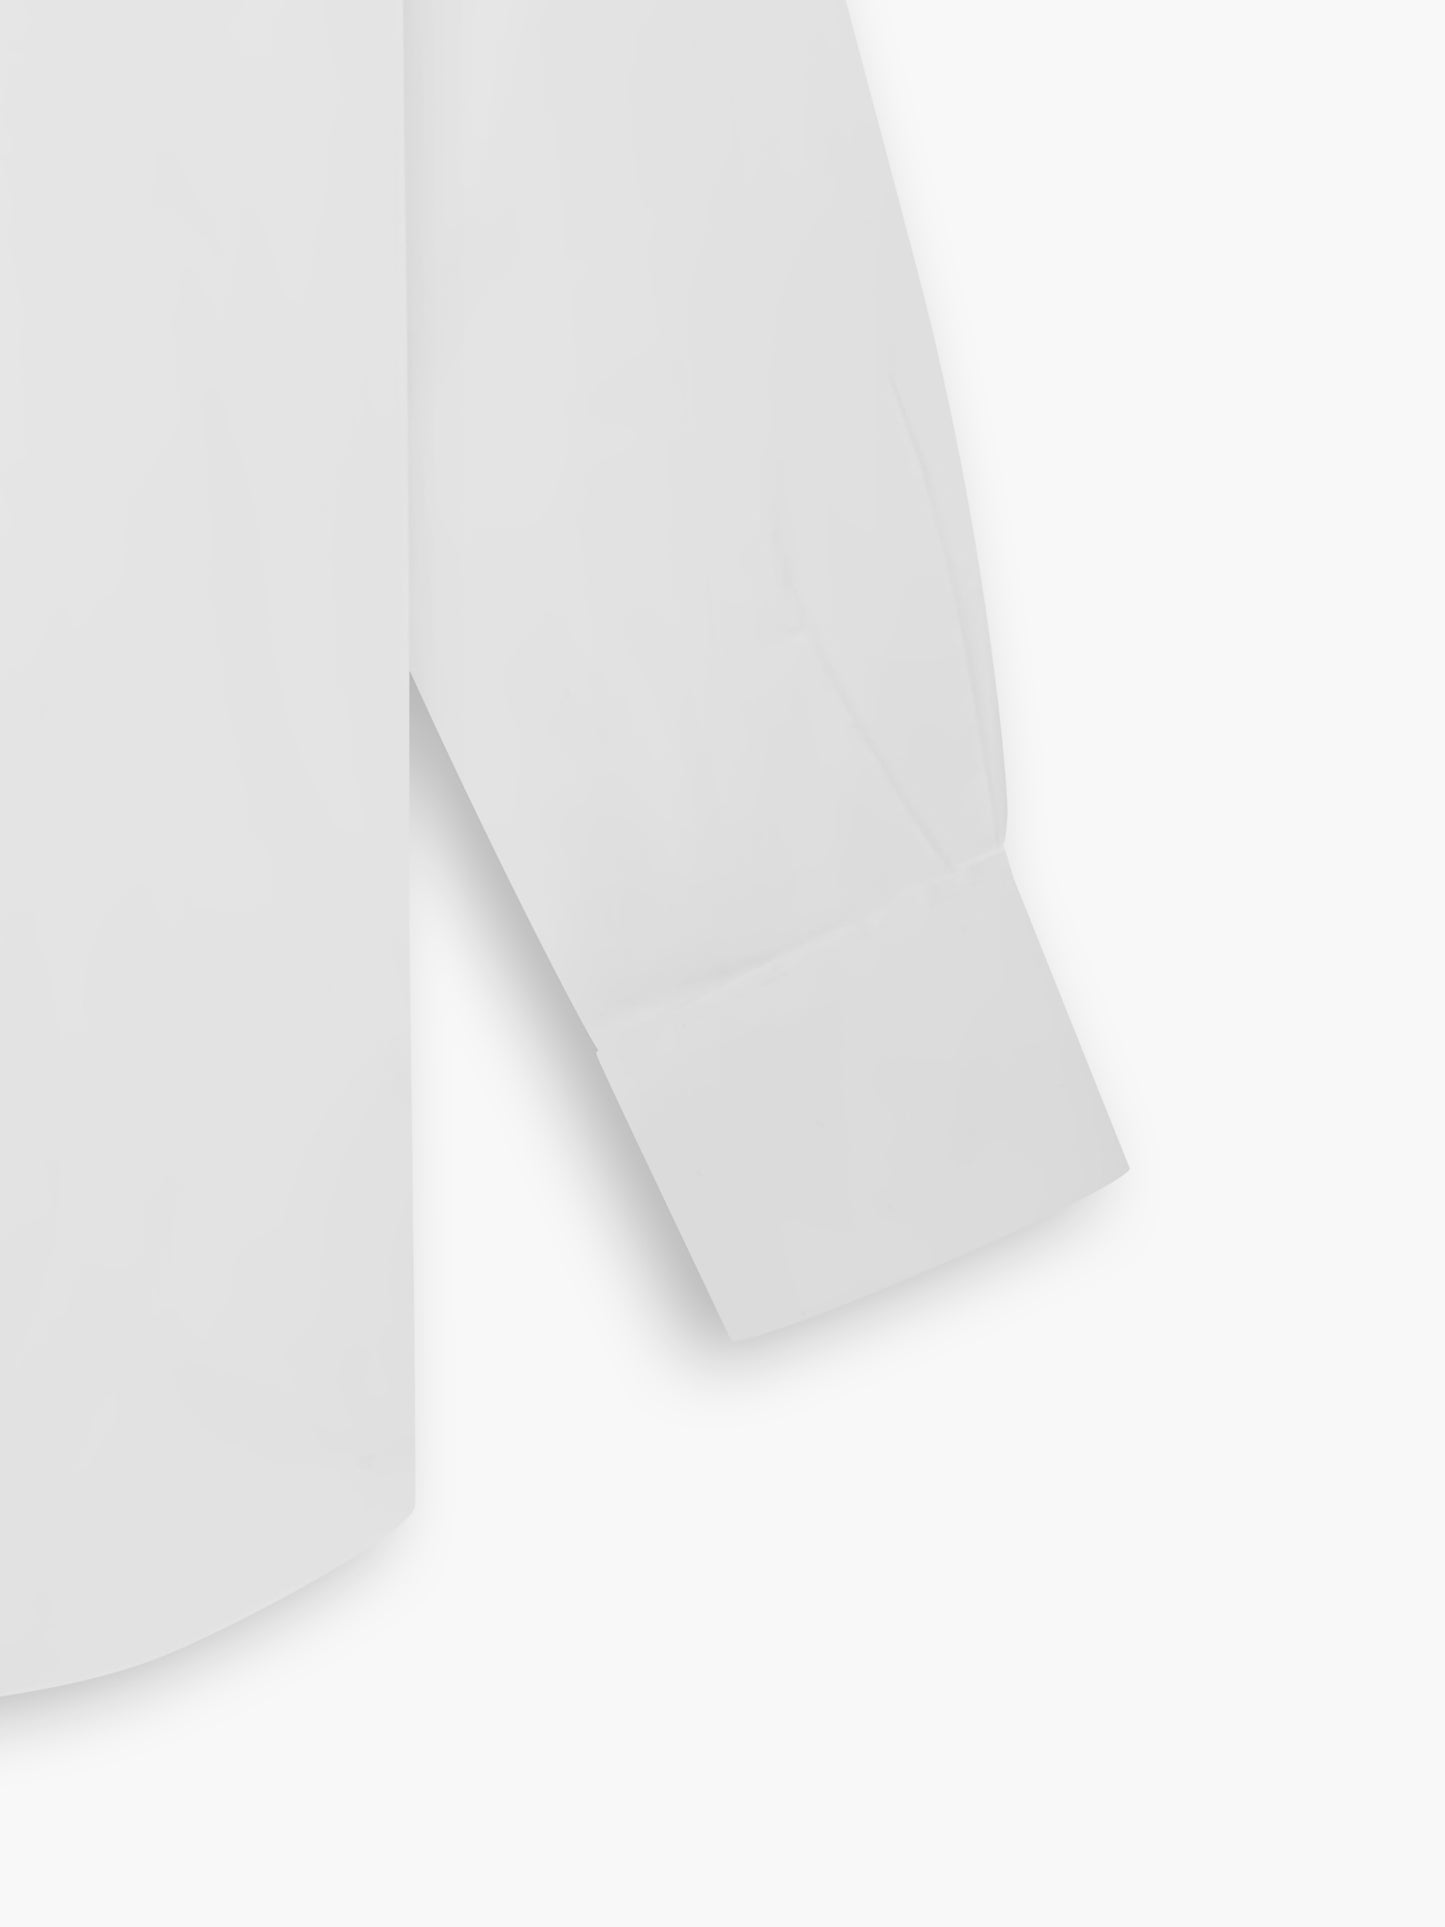 Non-Iron White Twill Slim Fit Double Cuff Cutaway Collar Shirt